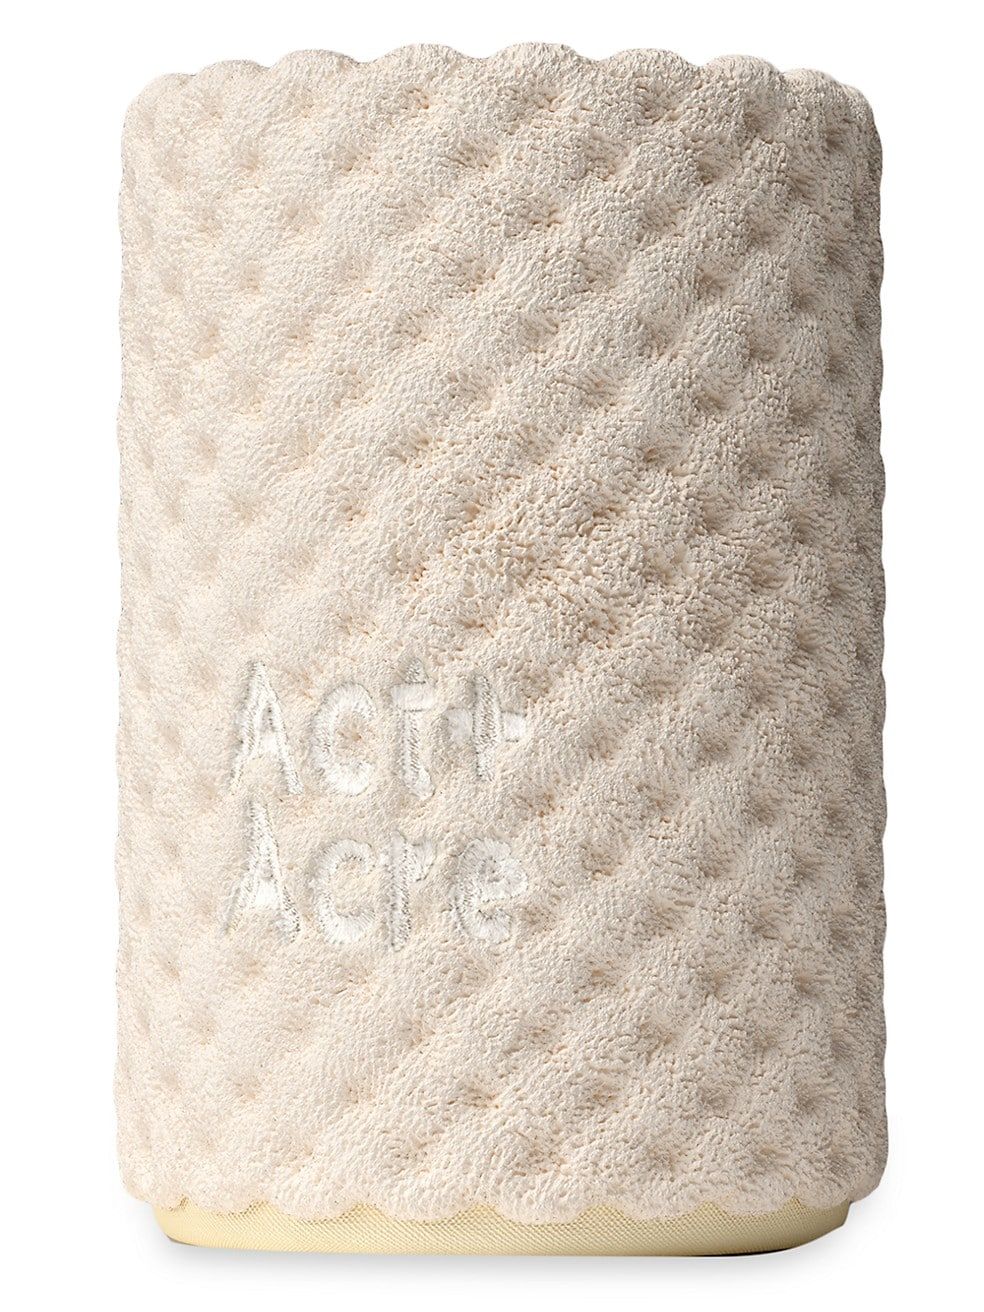 Act+Acre Intelligent Hair Towel | Saks Fifth Avenue